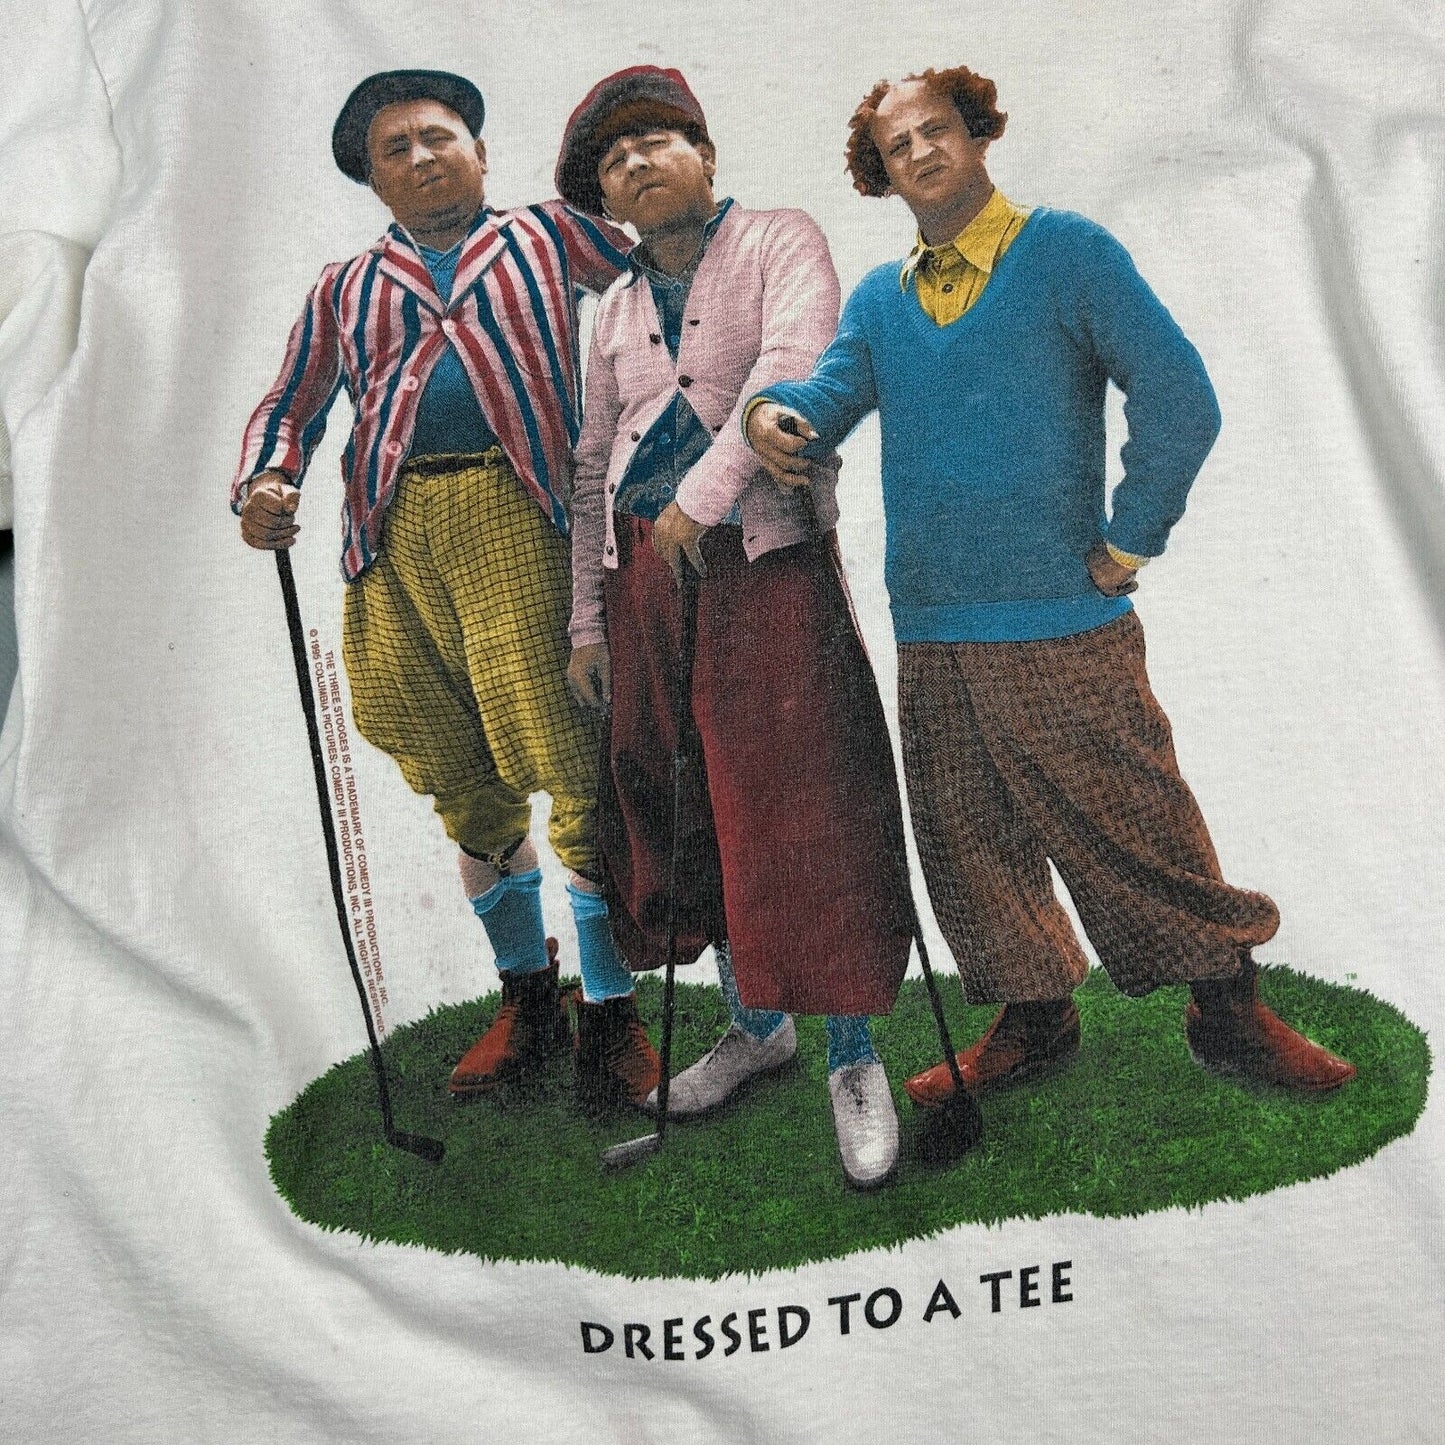 VINTAGE 90s | The Three Stooges Golfing Movie T-Shirt sz M Adult